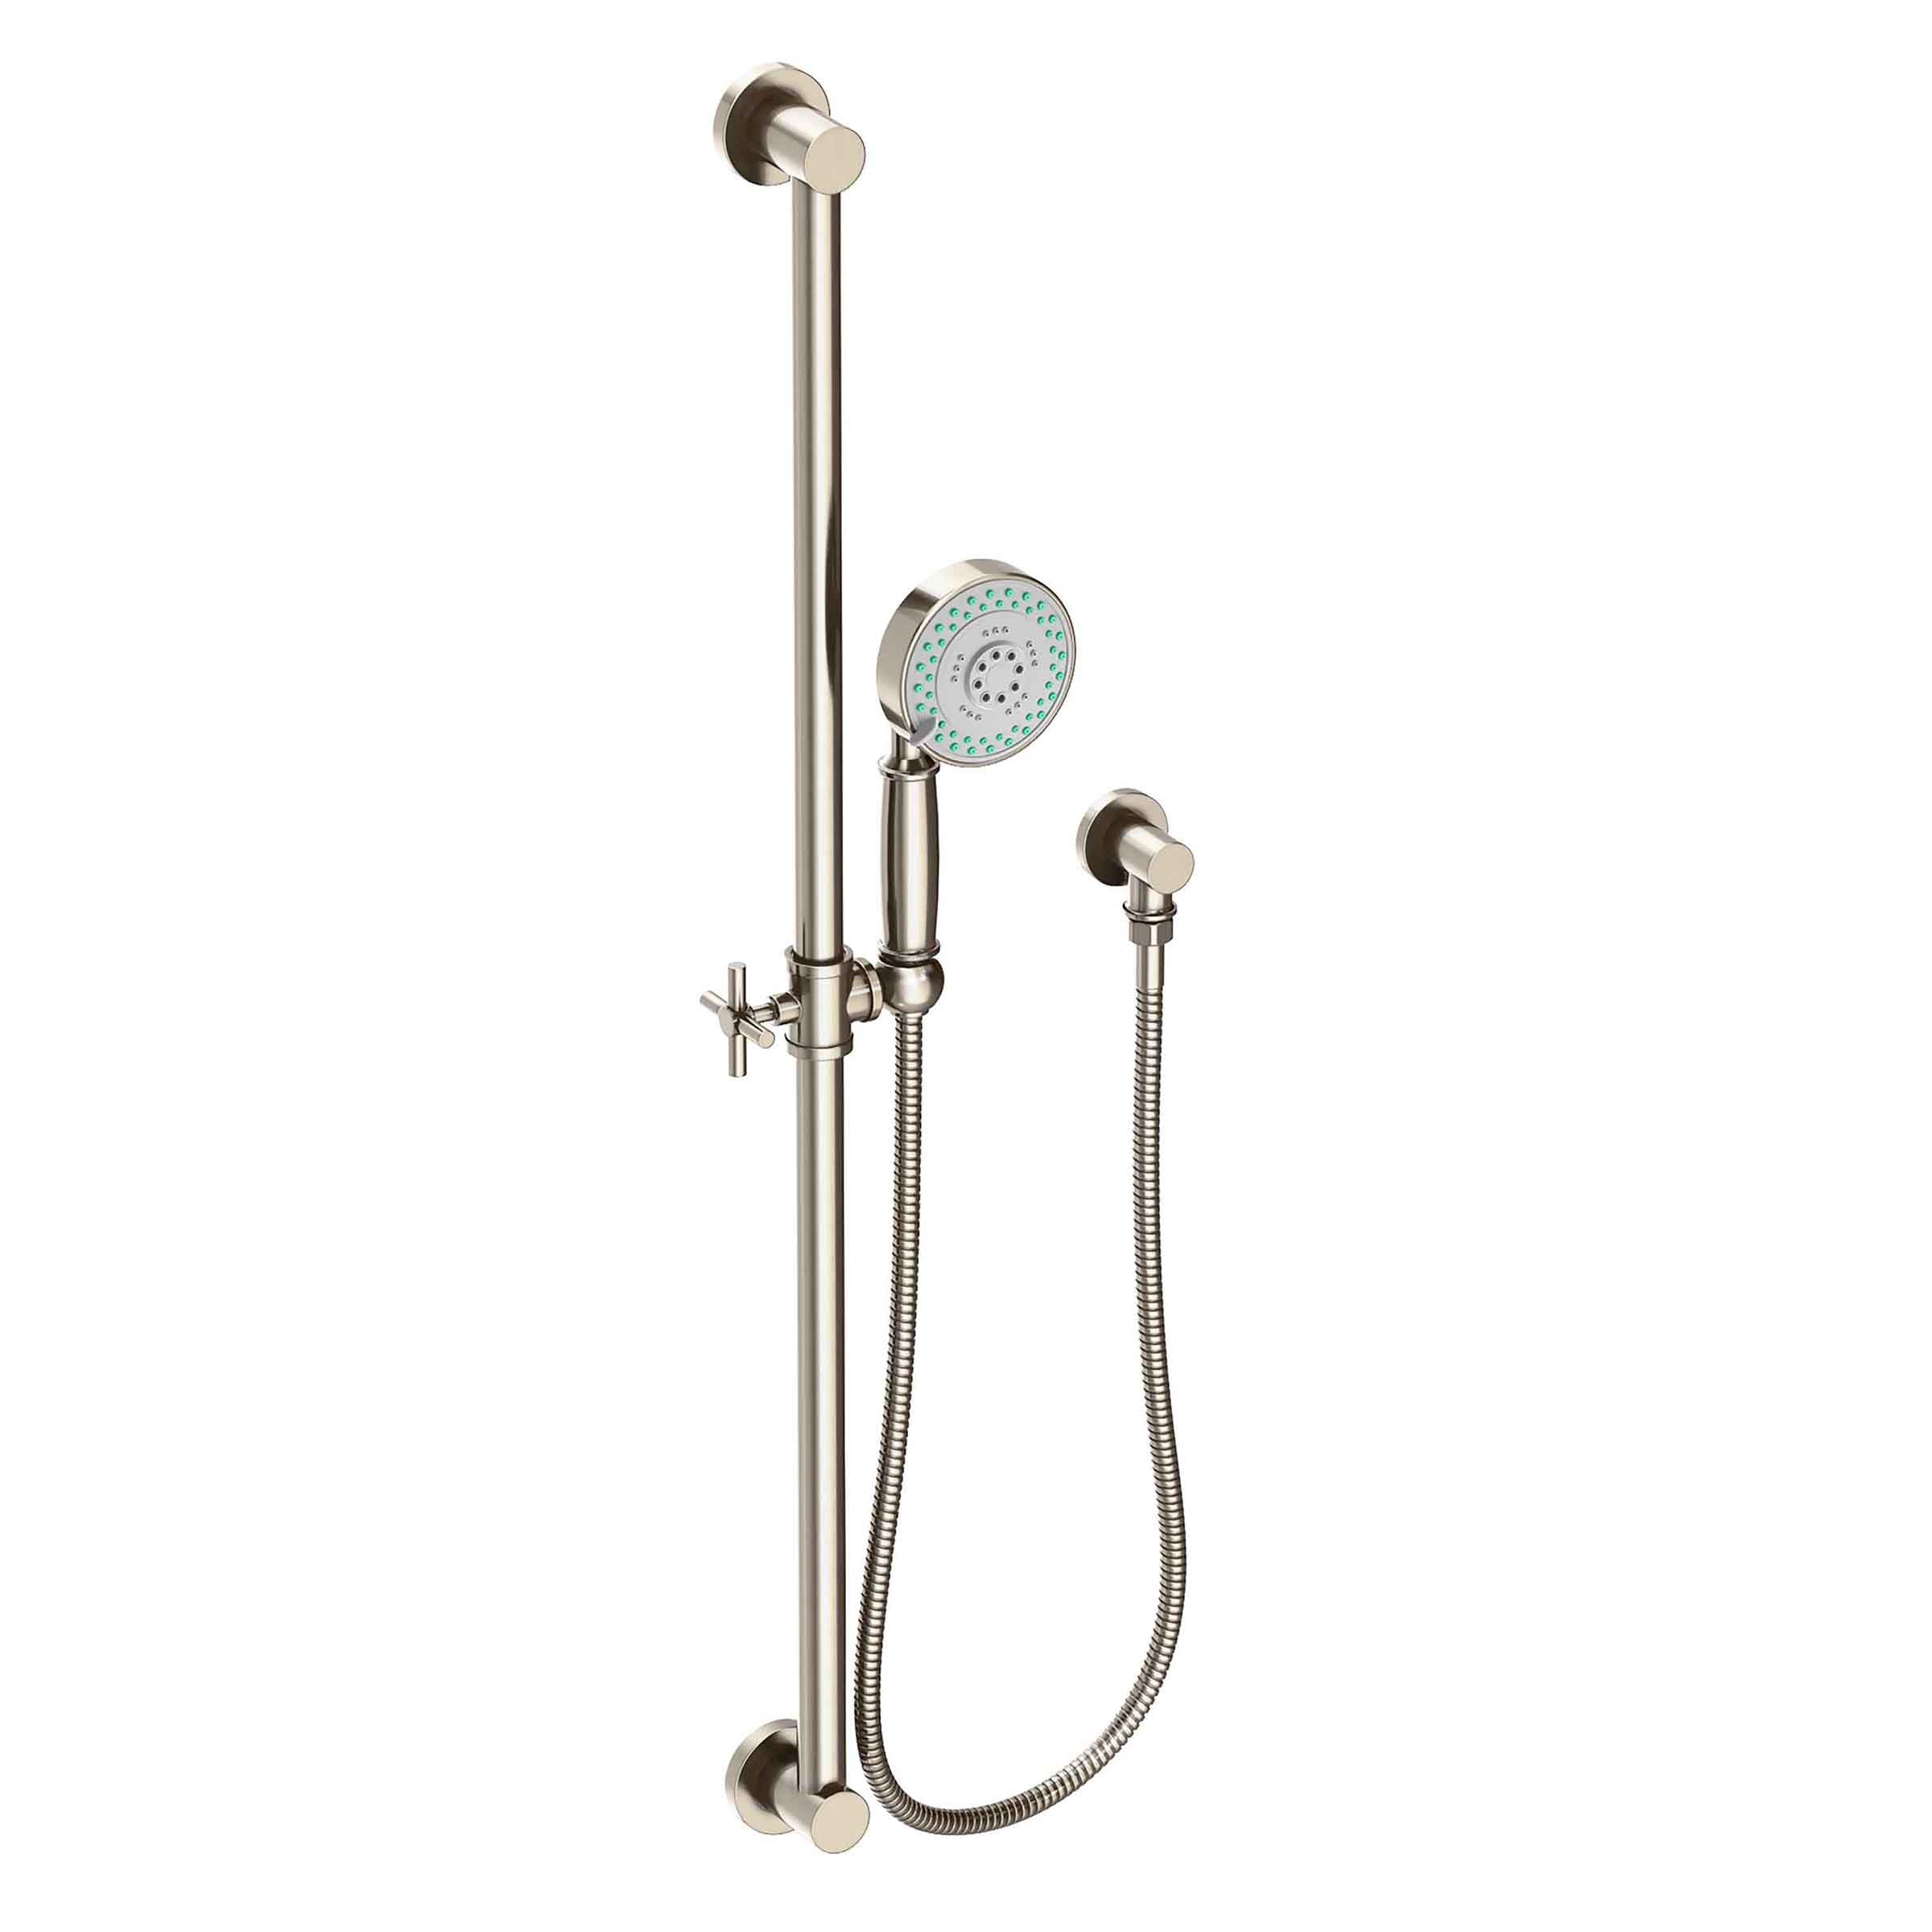 Newport Brass Tub & Shower Slide Bar with Multifunction Hand Shower Set